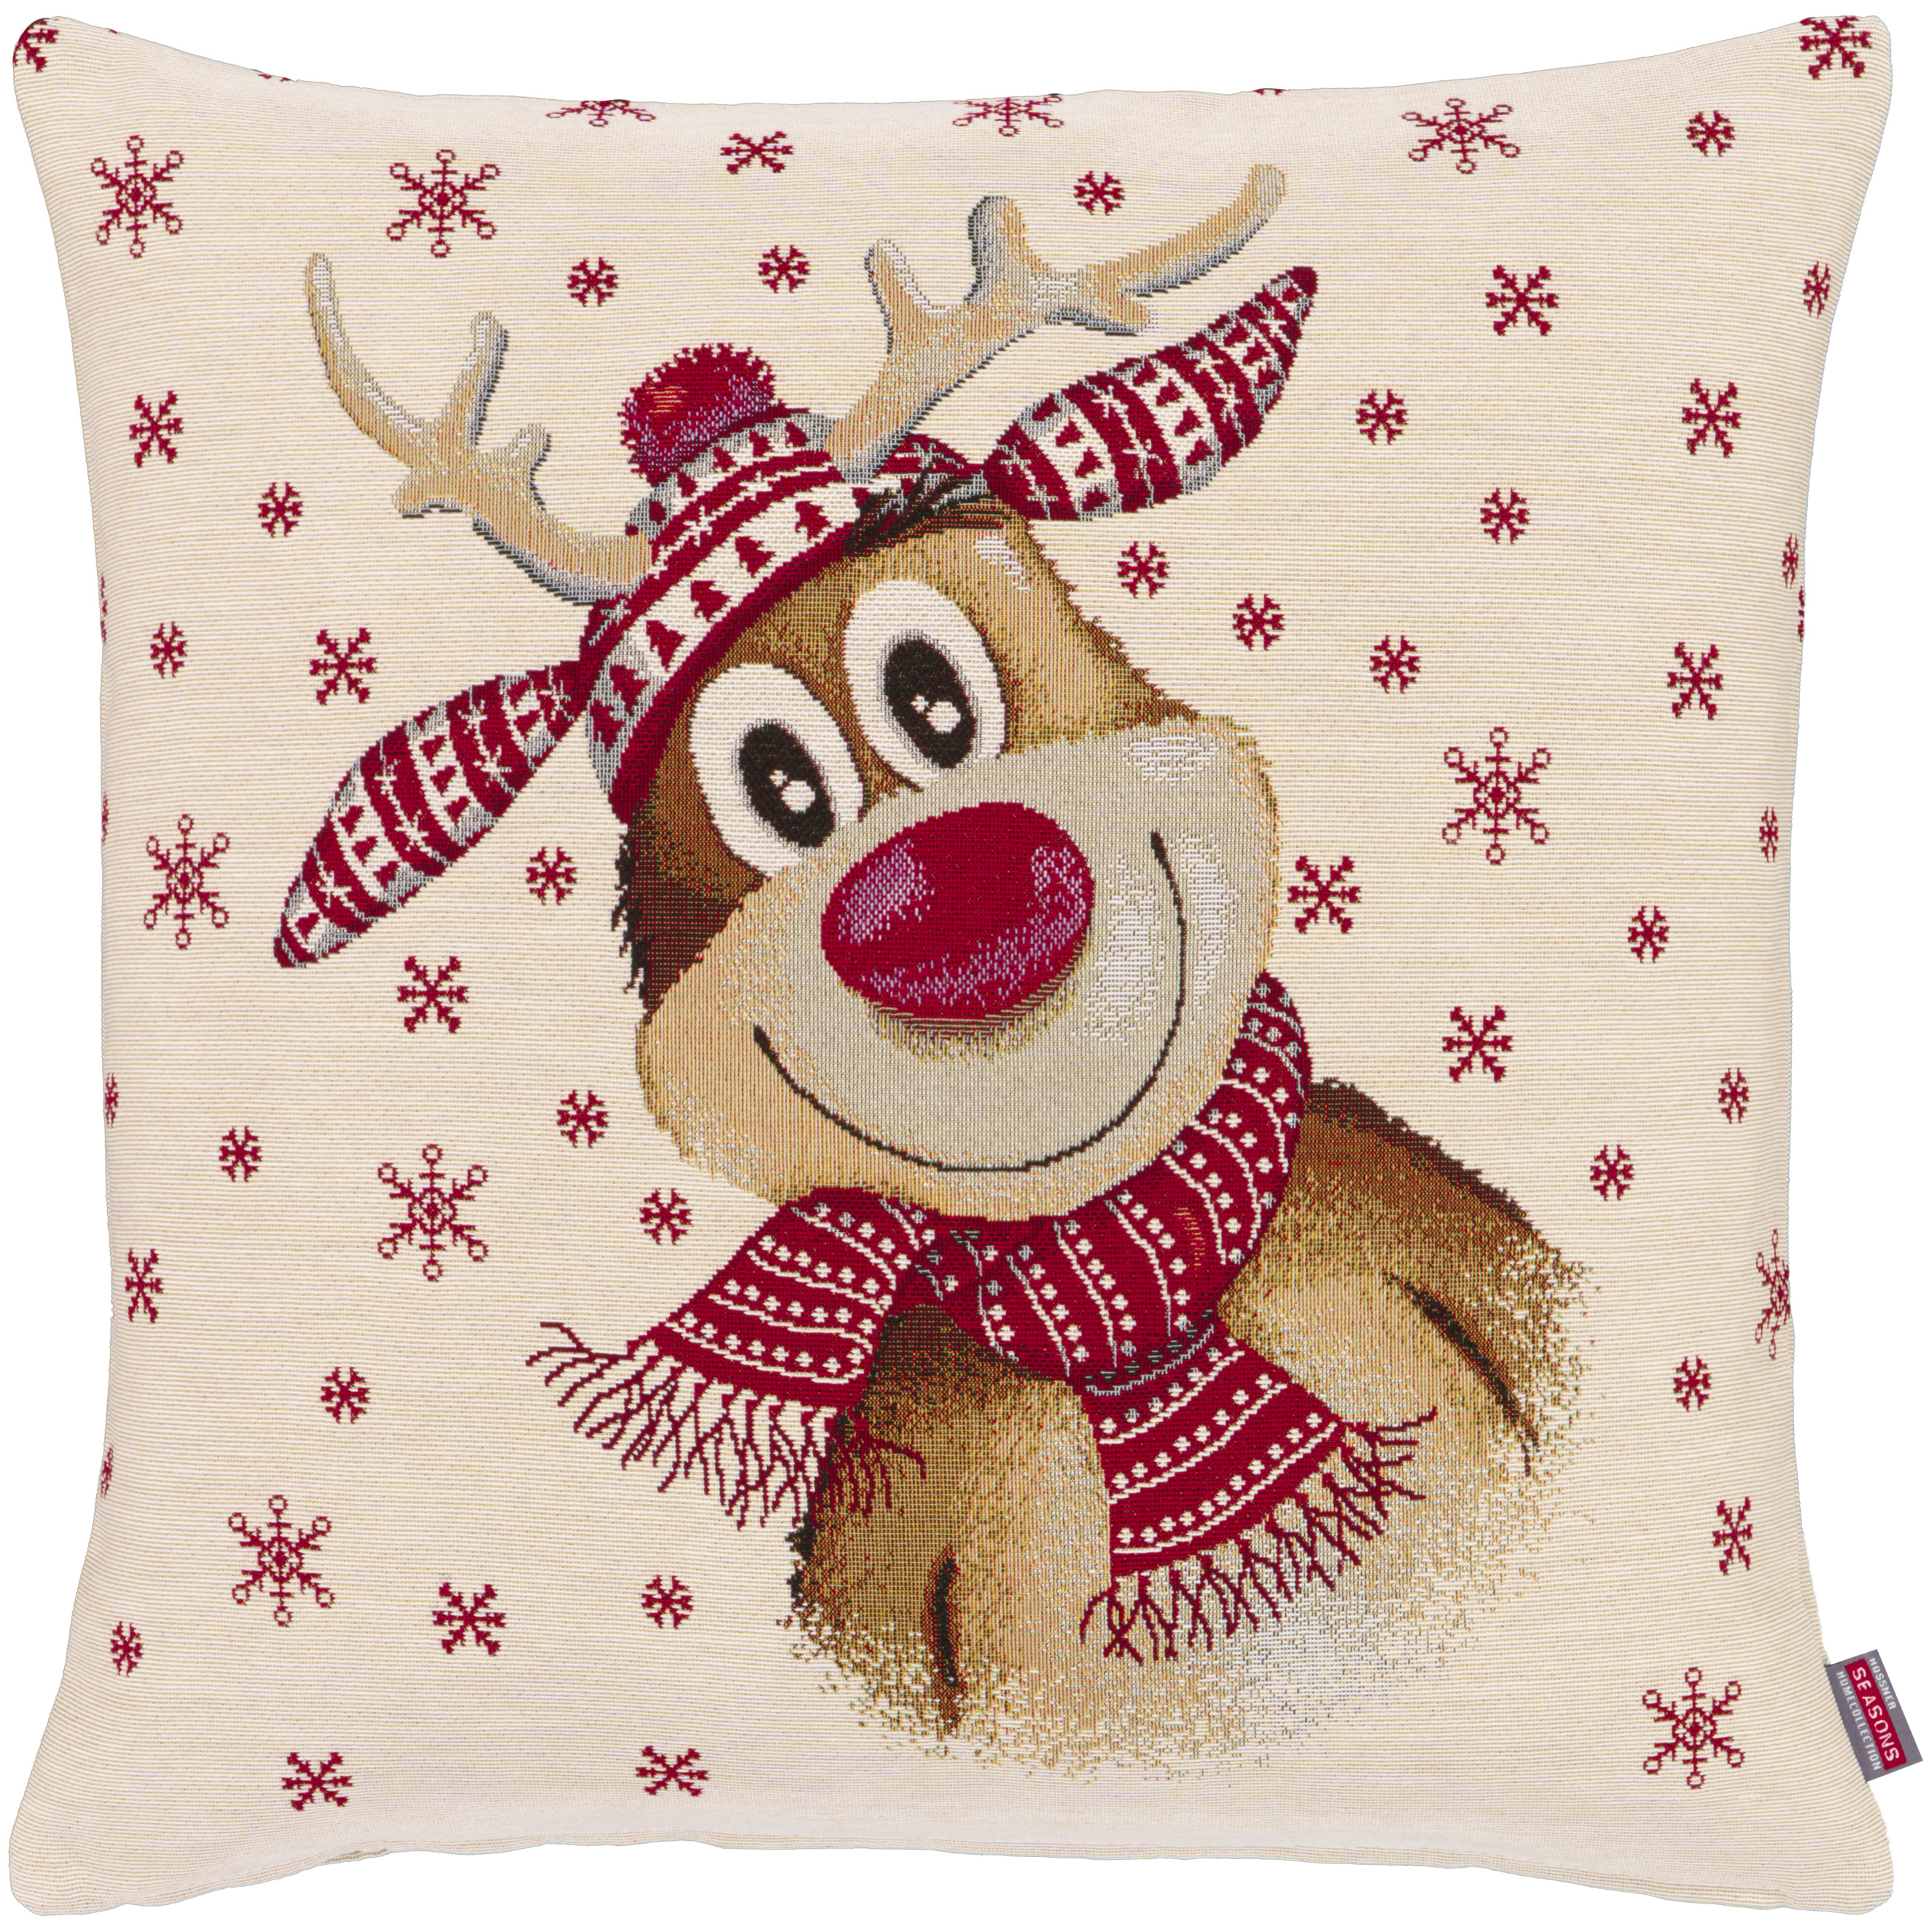 eBay Schlitten Sofakissen | Kissen 45x45 cm Gobelin Weihnachten Kissenbezug Kissenhülle